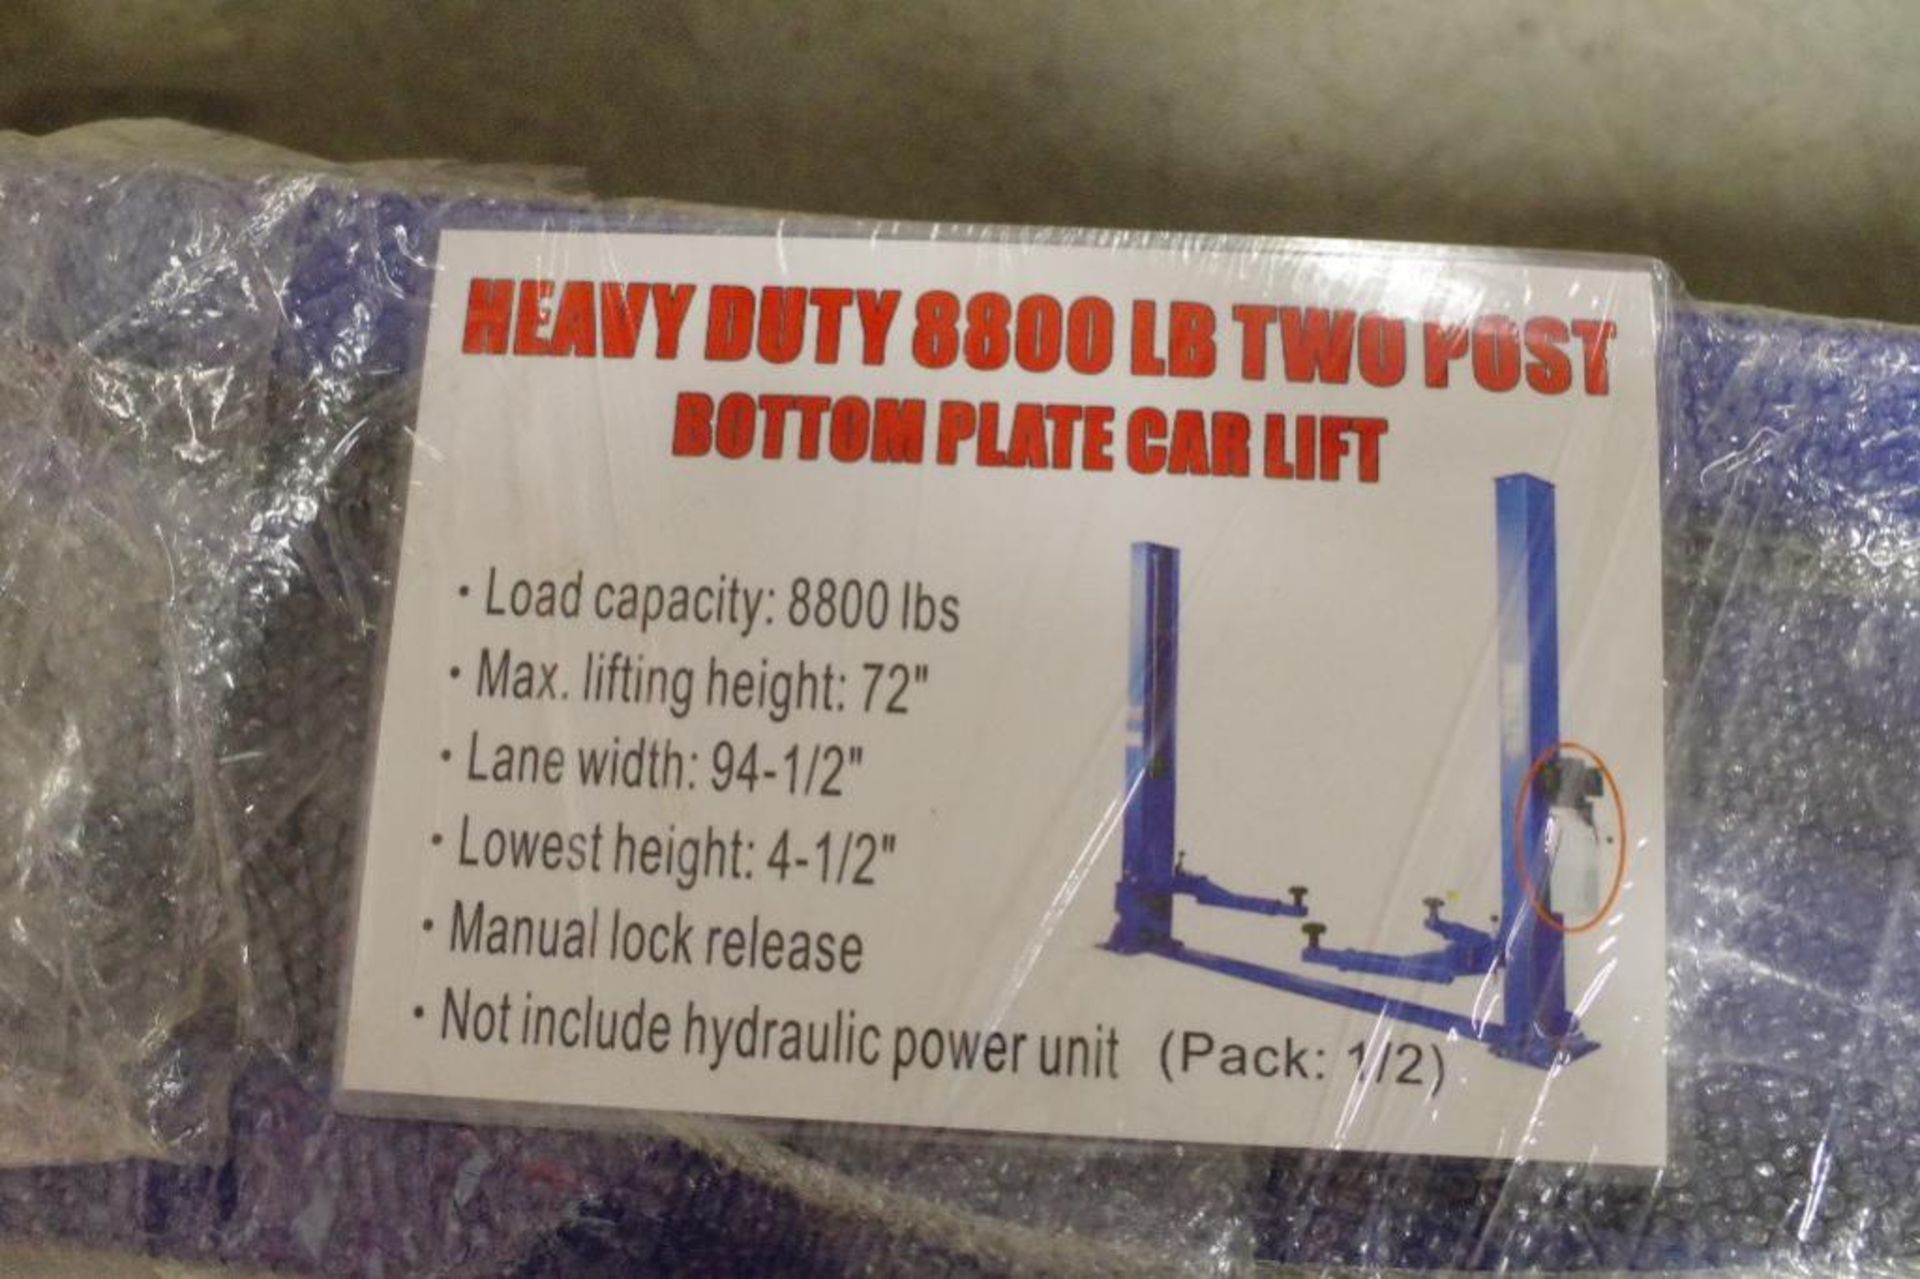 NEW Heavy Duty 8800 lb. Two Post Bottom Plate Car Lift w/ Hydraulic Power Unit - Image 2 of 4